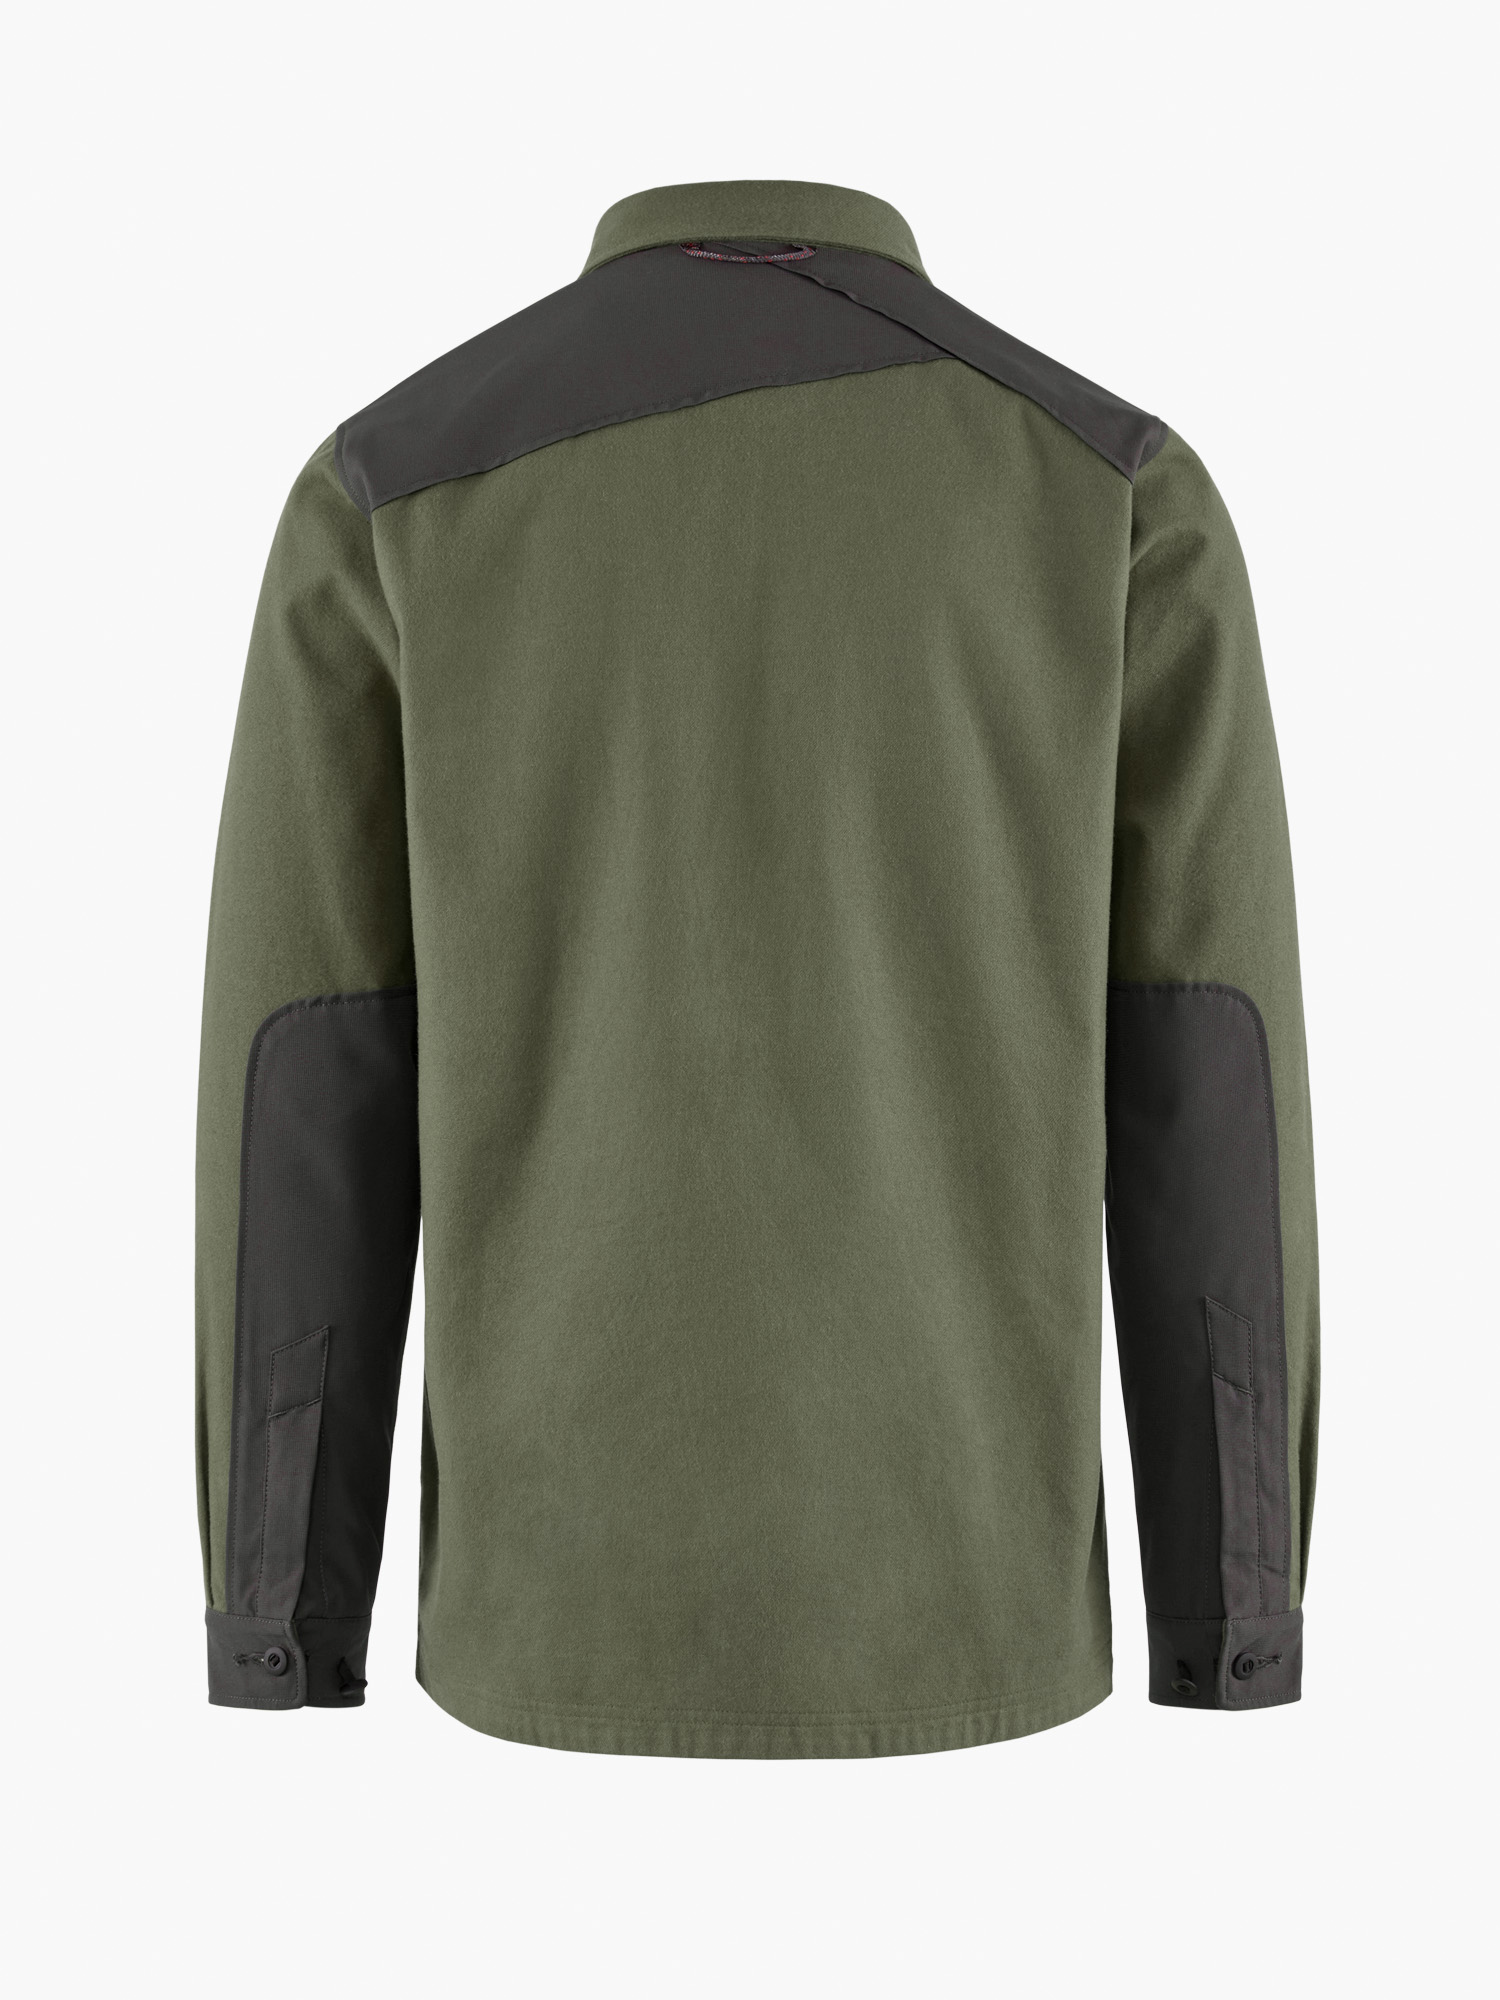 10031 - Forsete Shirt M's - Dusty Green